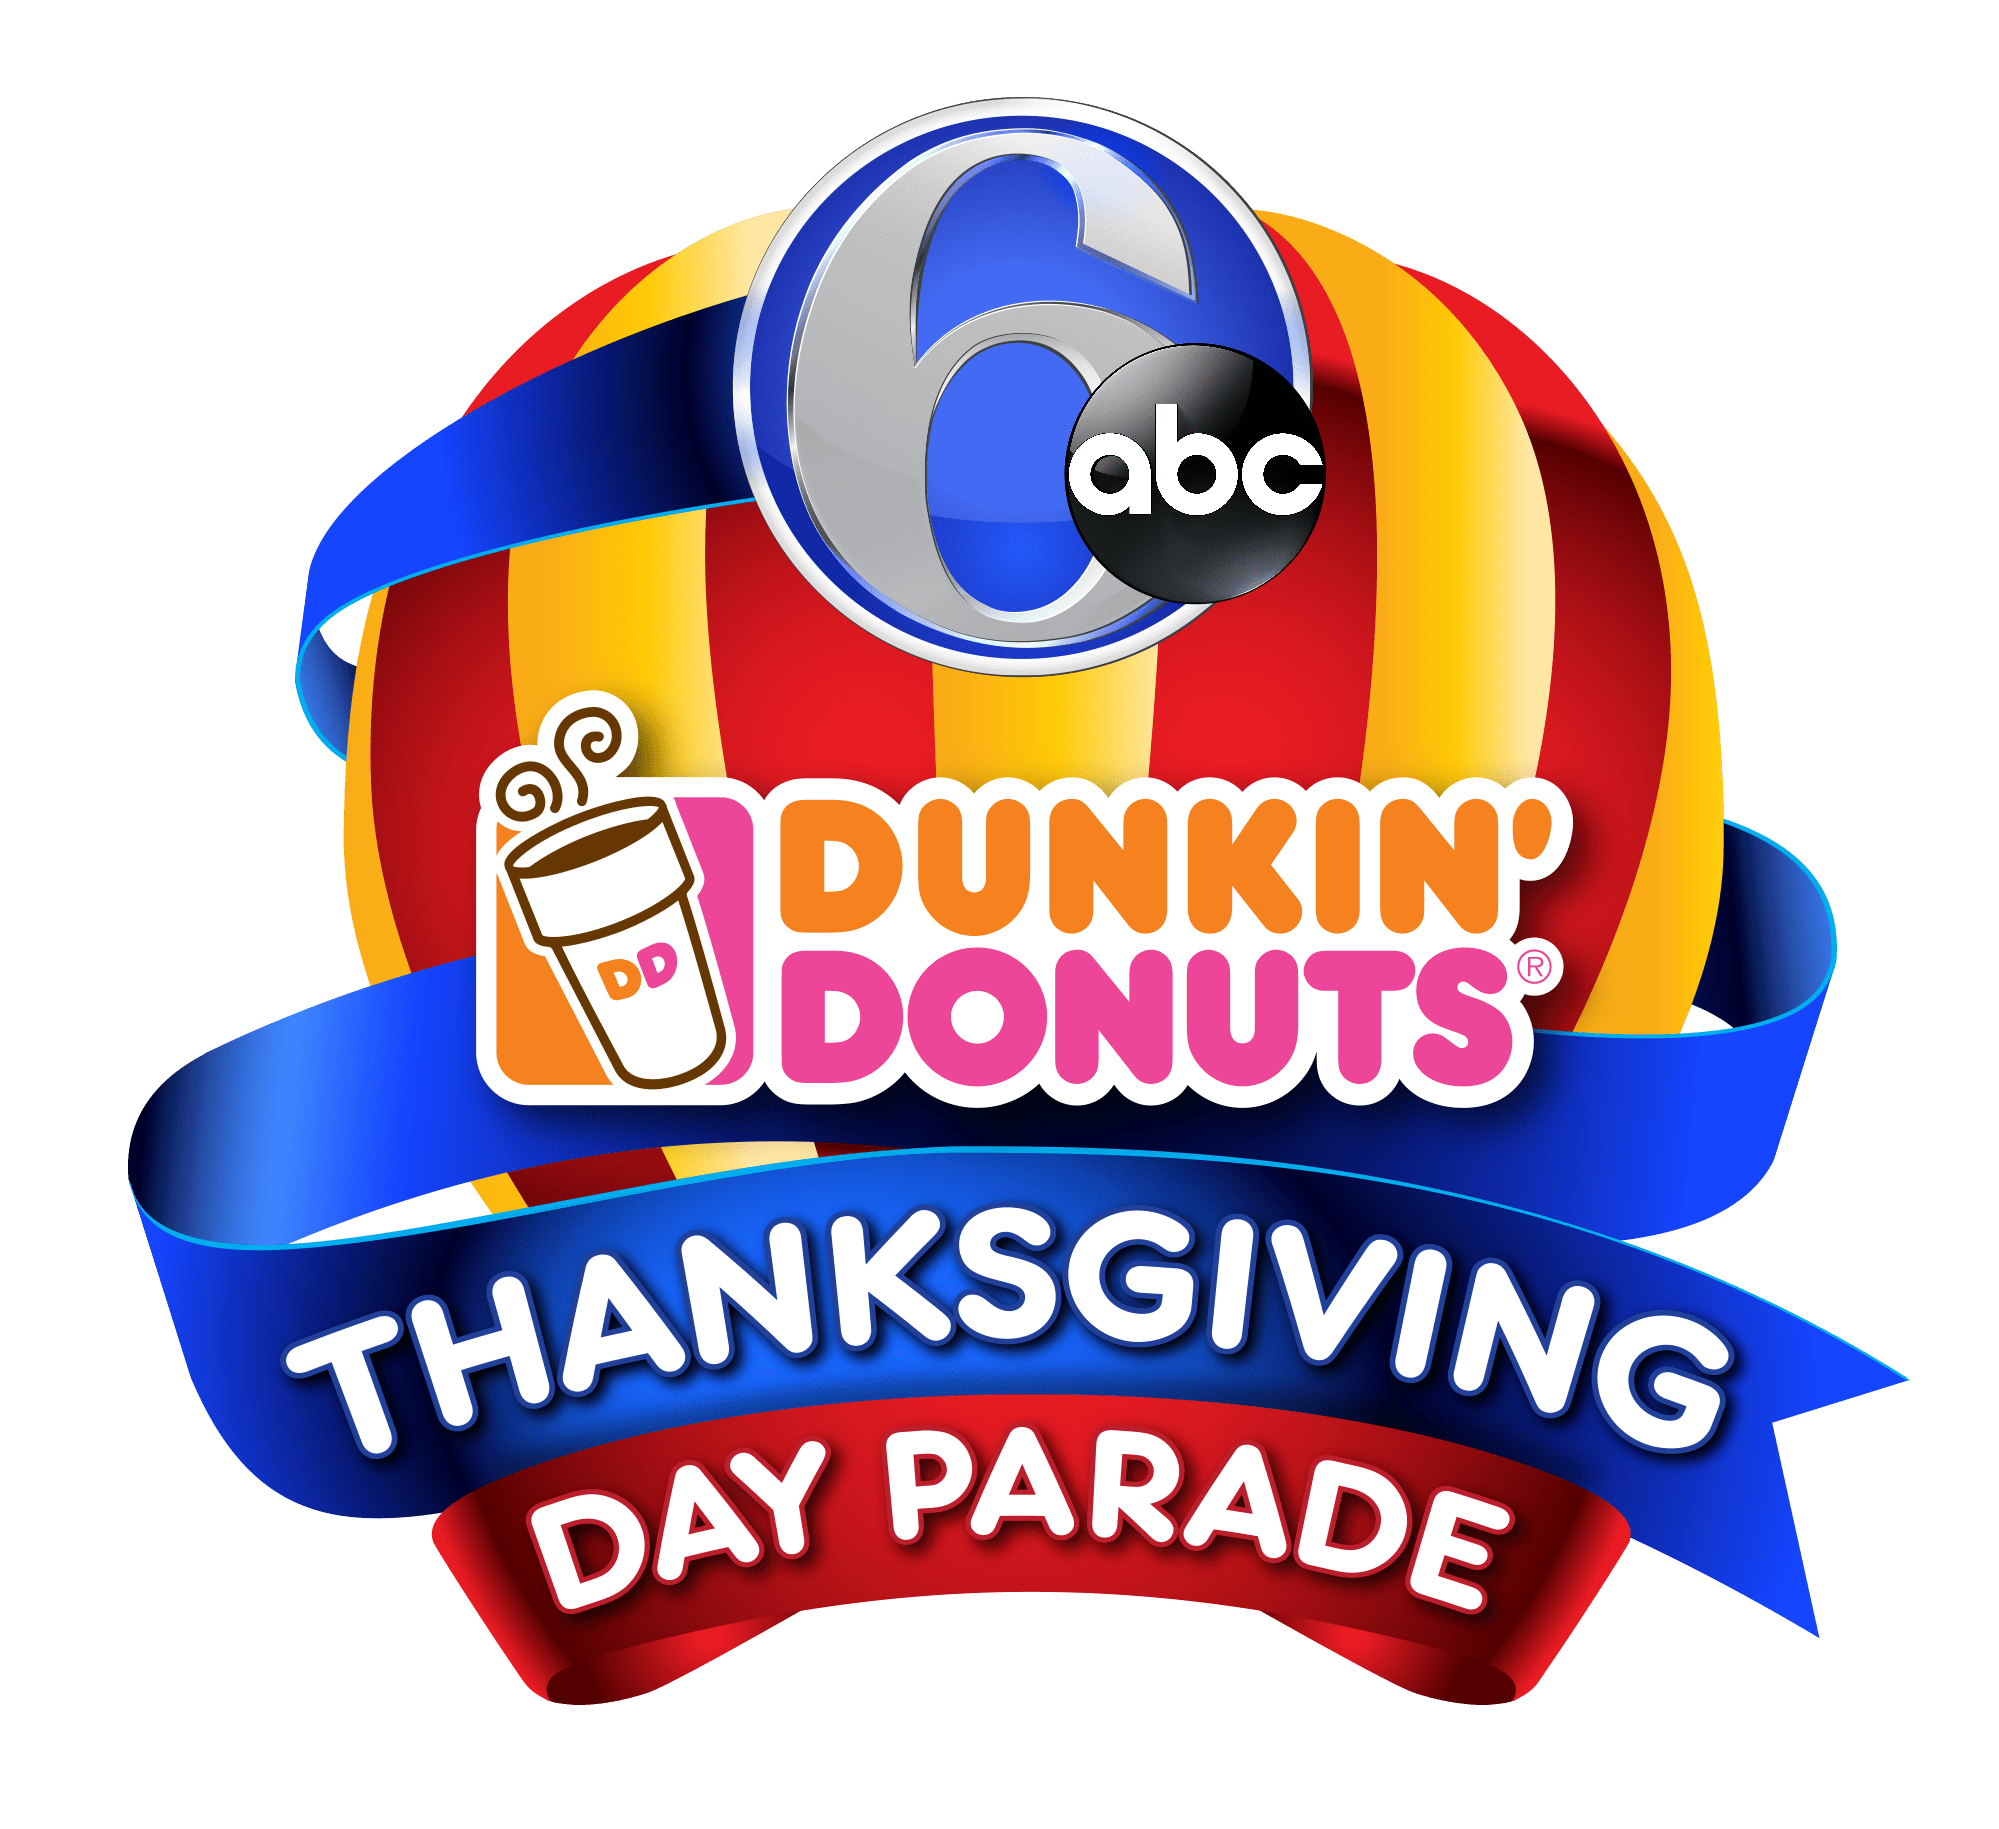 6abc thanksgiving parade